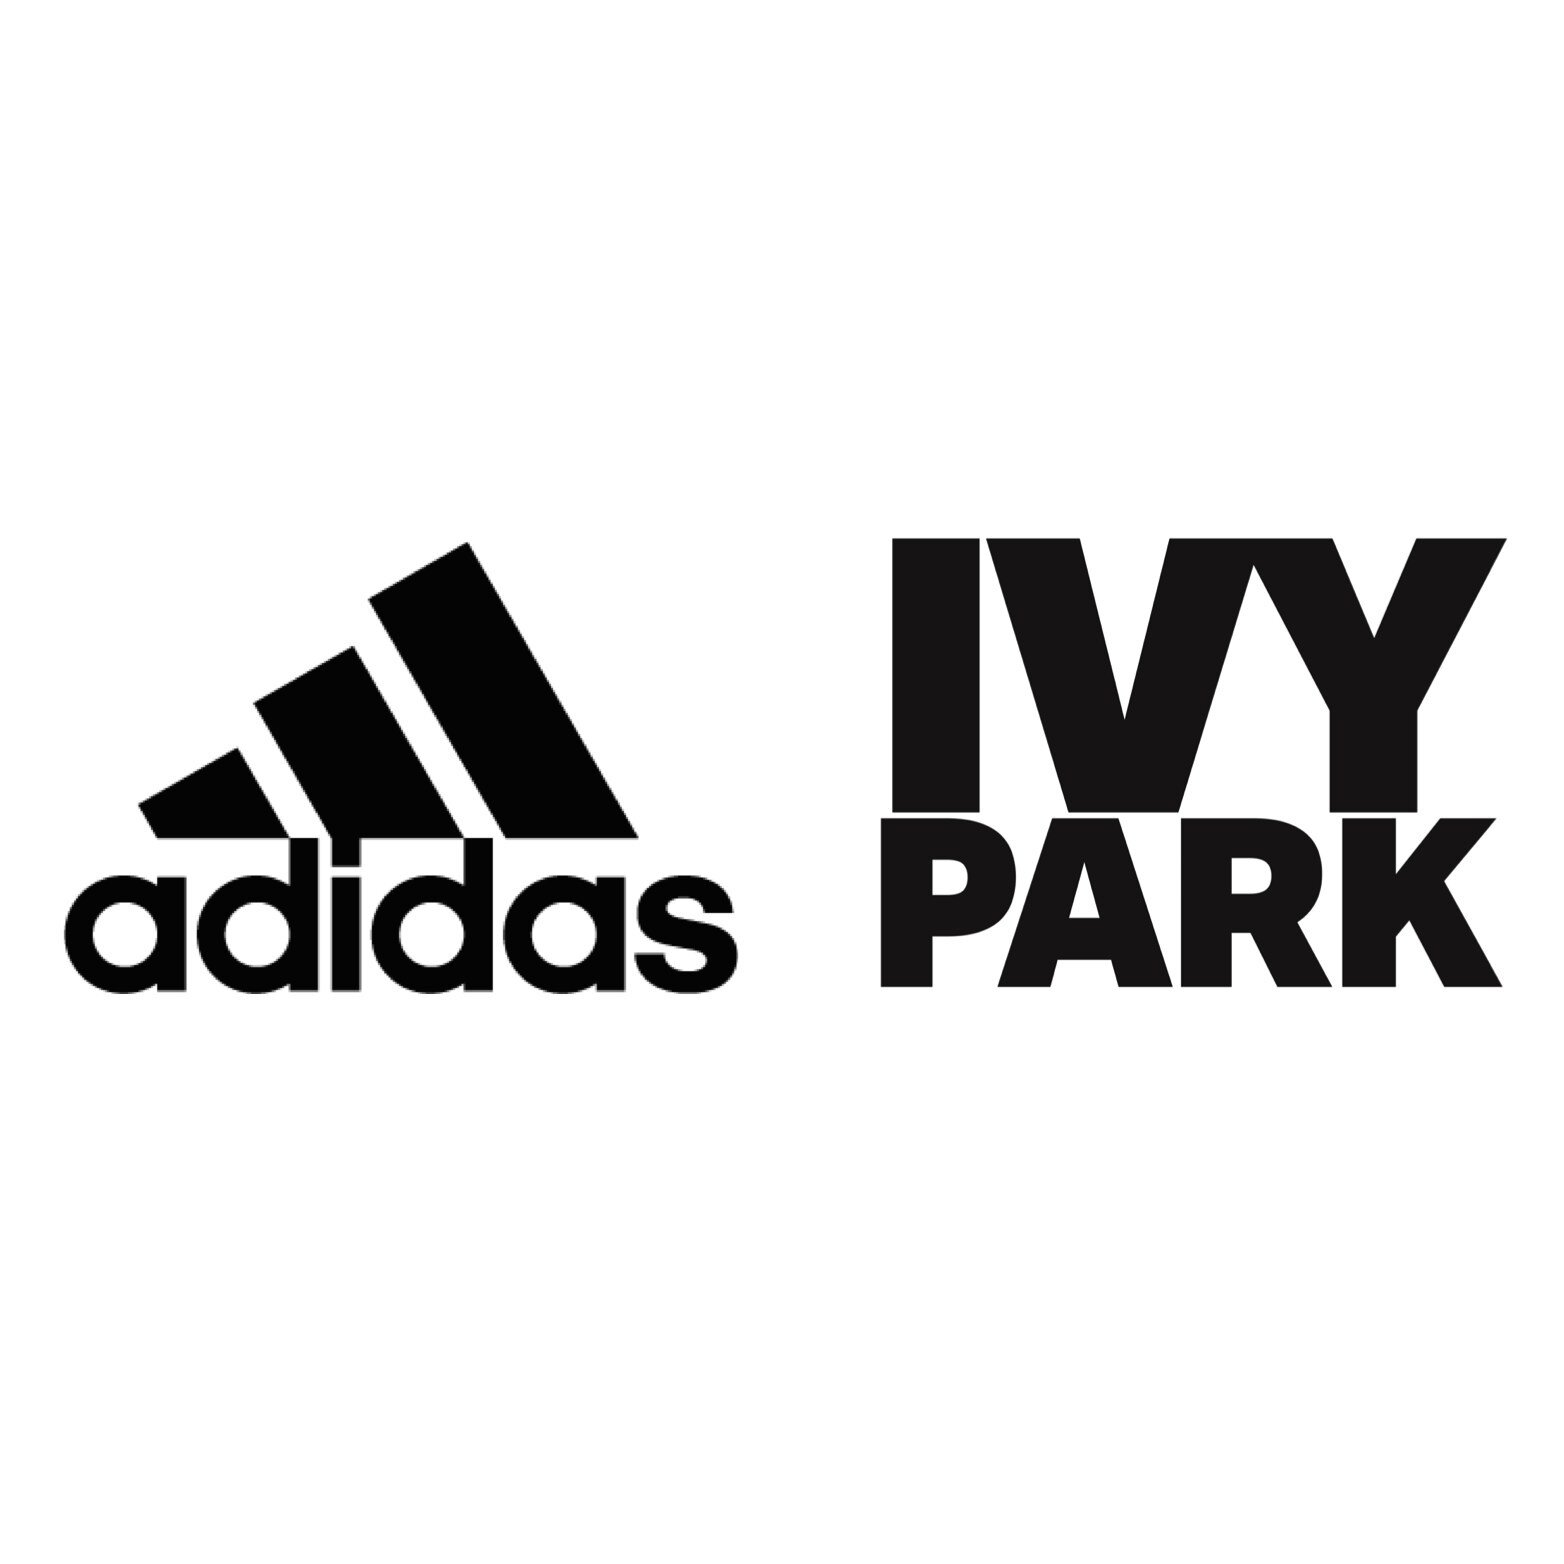 ivy park adidas restock